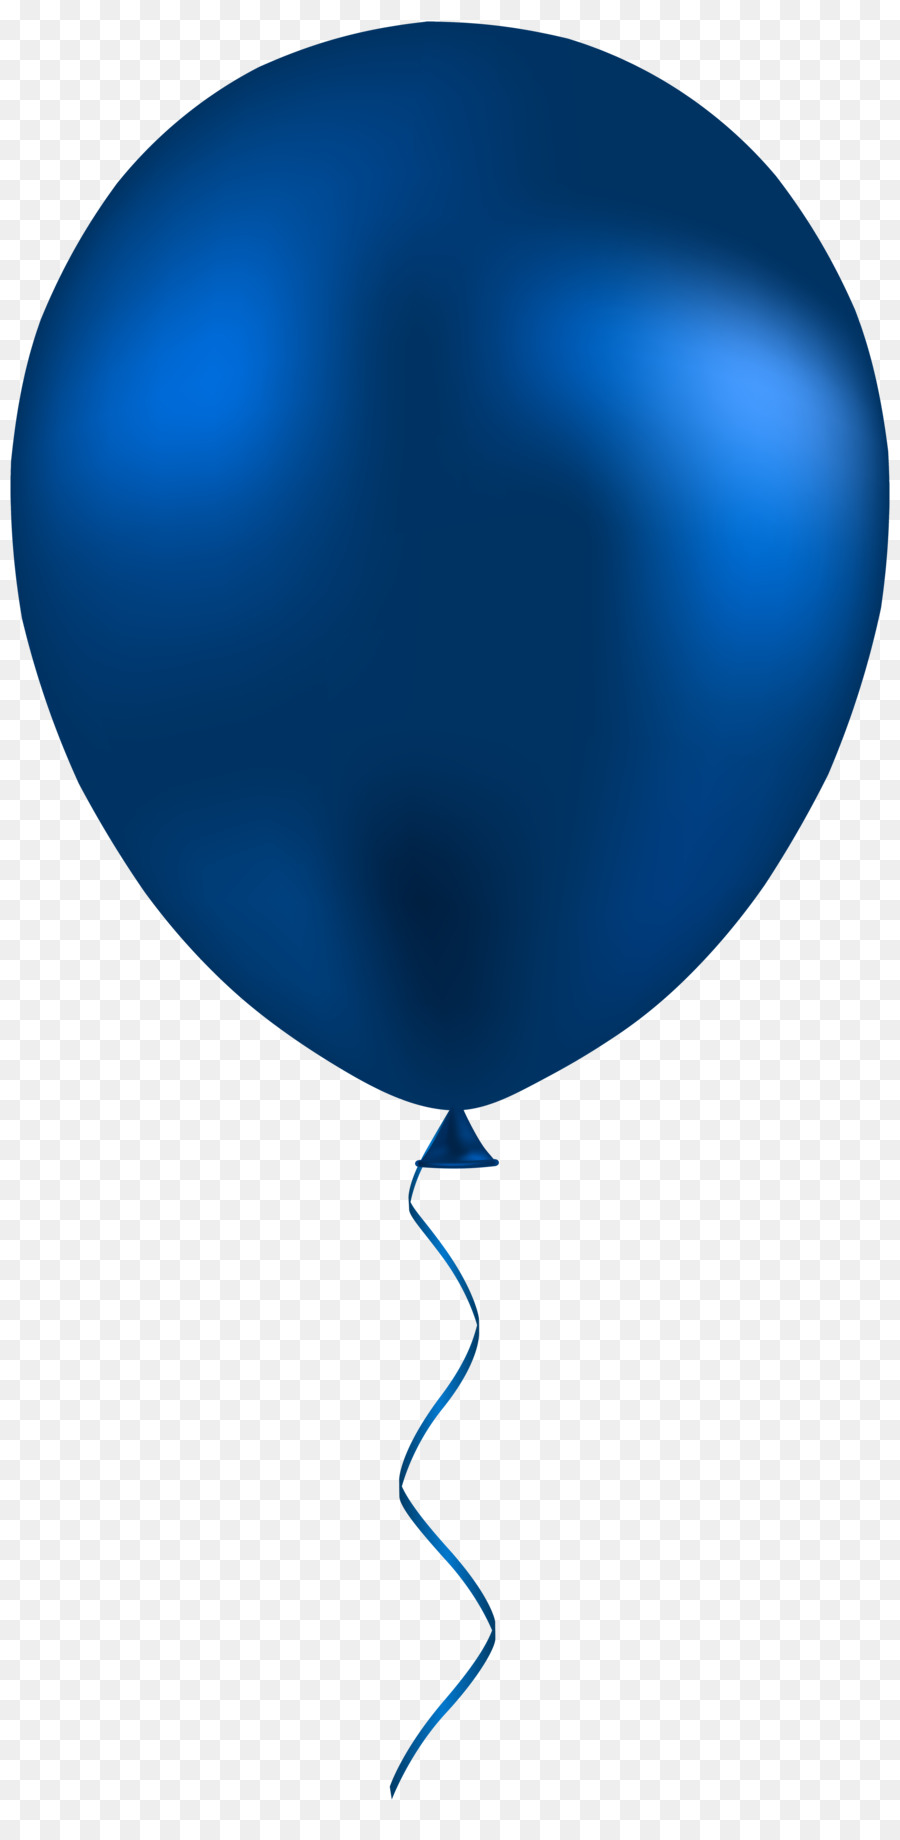 Ballon-Marine-blau clipart - Ballon